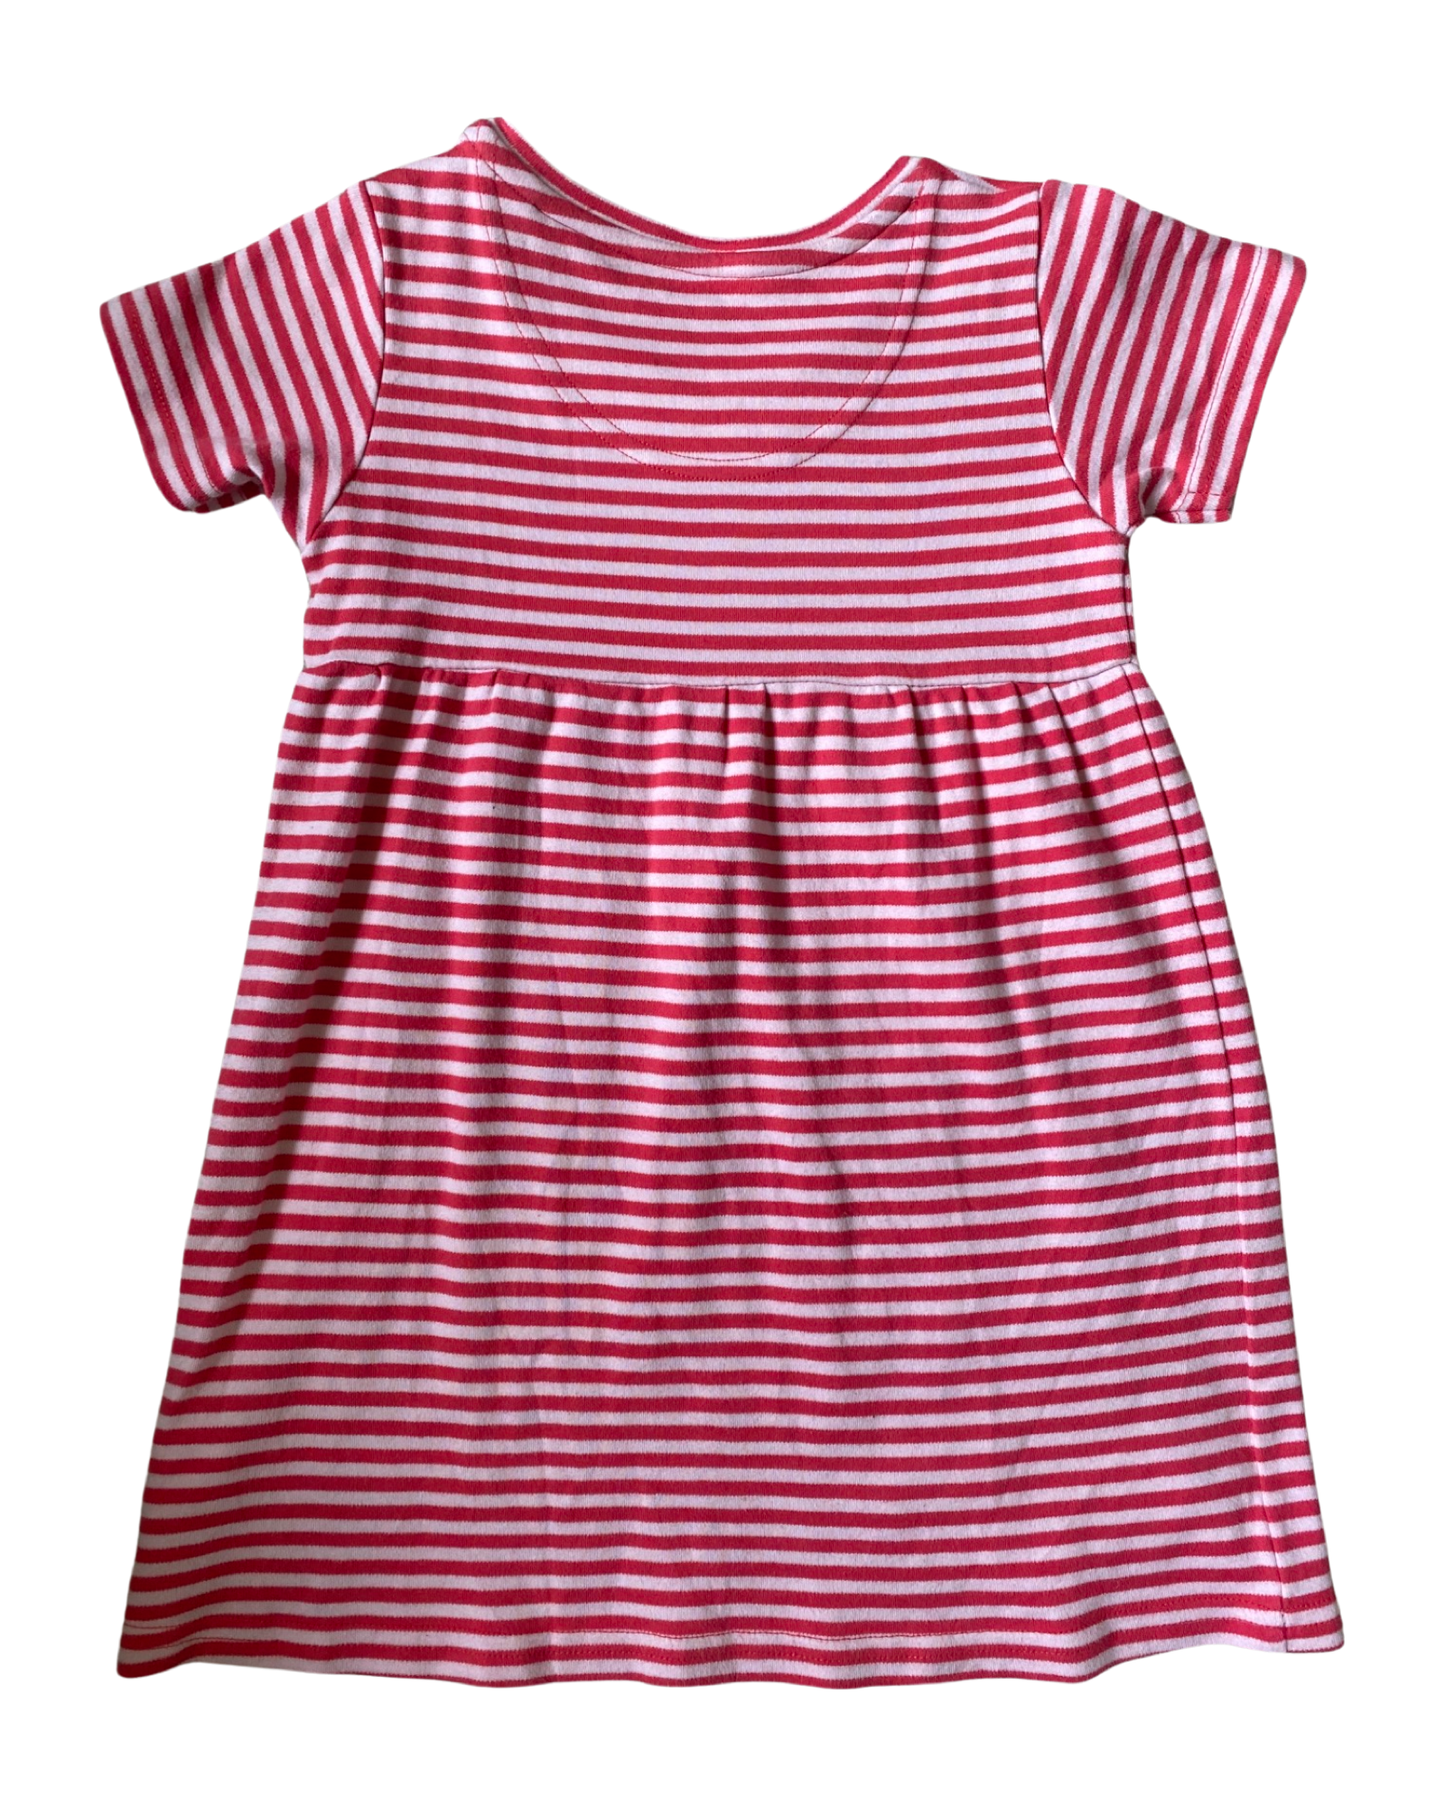 Frugi striped pink jersey dress (size 2-3yrs)